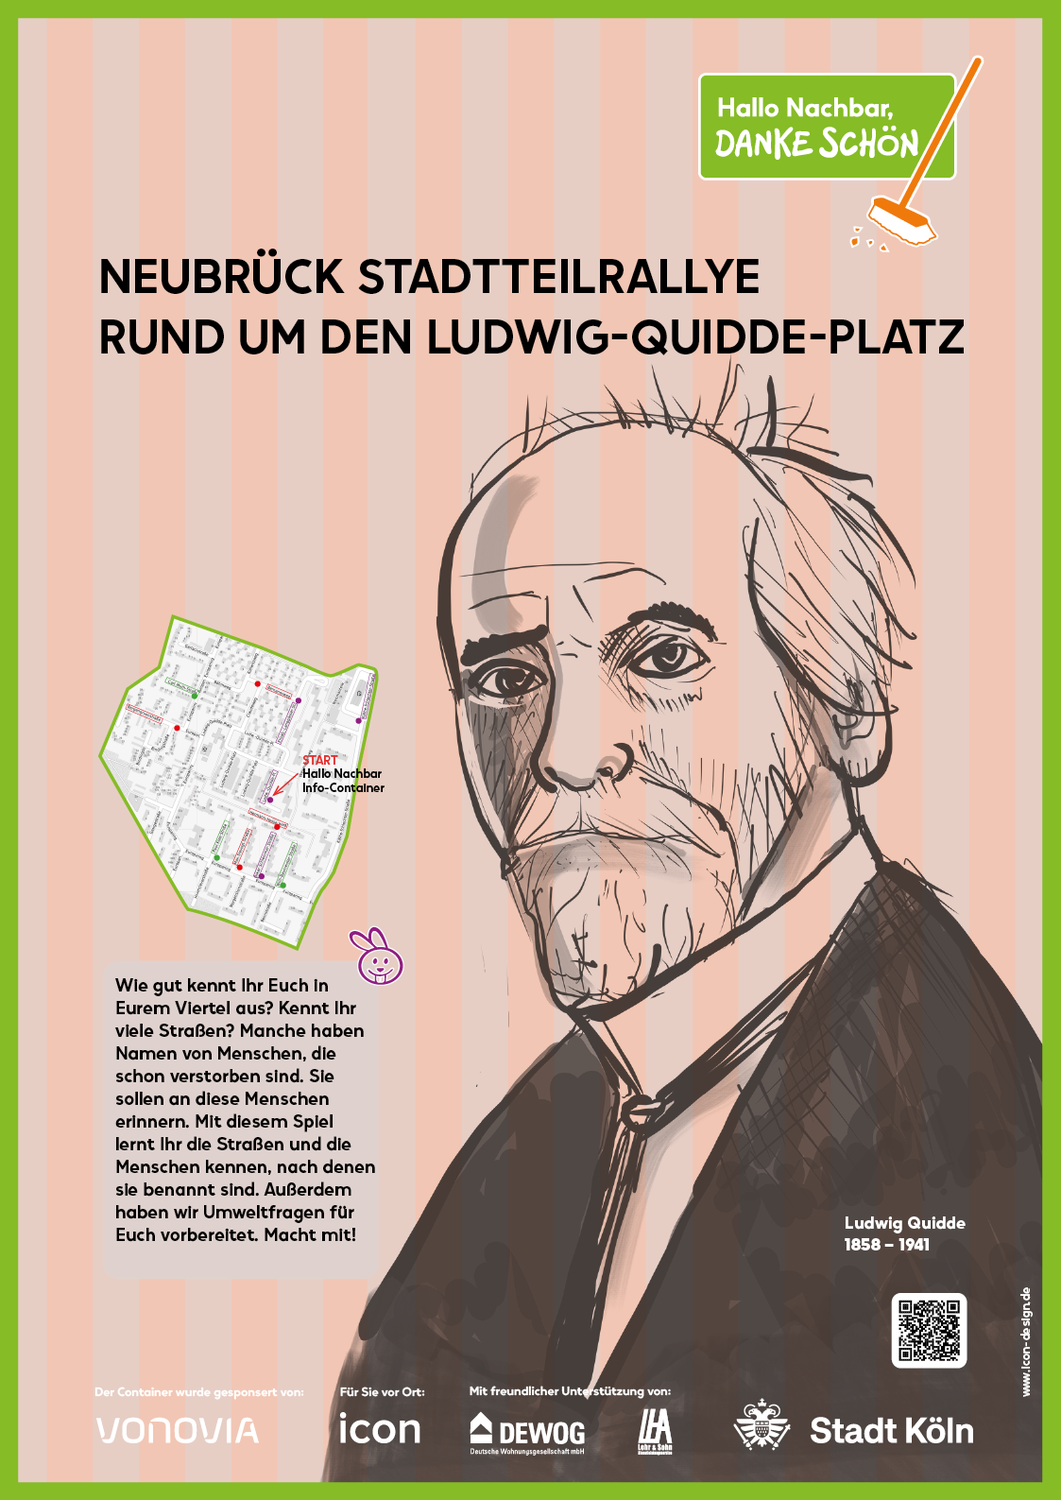 Erste Neubrück Stadtteilrallye startet am 28. März